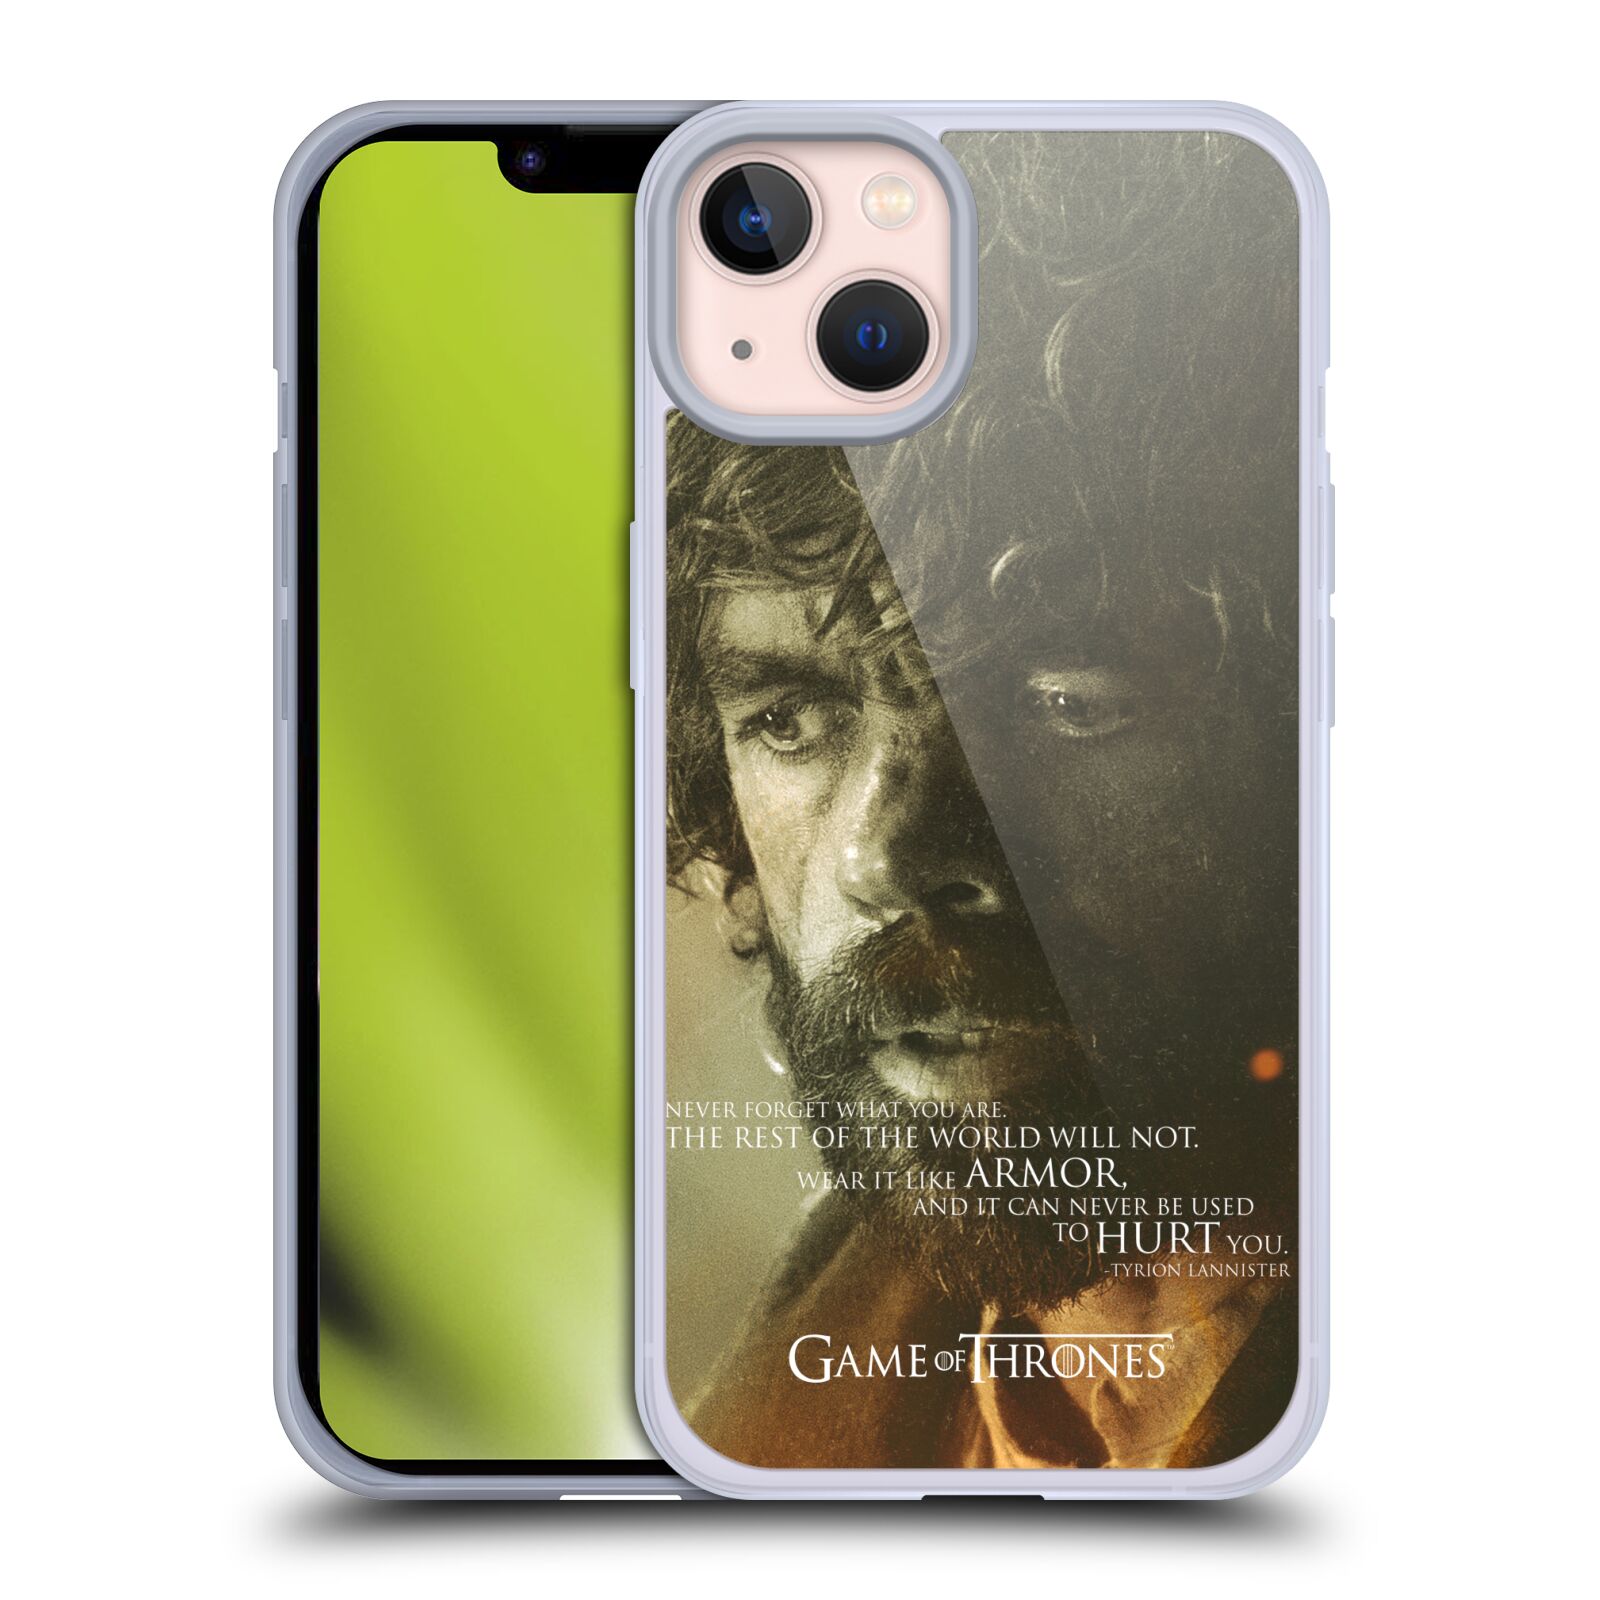 Silikonové pouzdro na mobil Apple iPhone 13 - Head Case - Hra o trůny - Tyrion Lannister (Silikonový kryt, obal, pouzdro na mobilní telefon Apple iPhone 13 s motivem Hra o trůny - Tyrion Lannister)